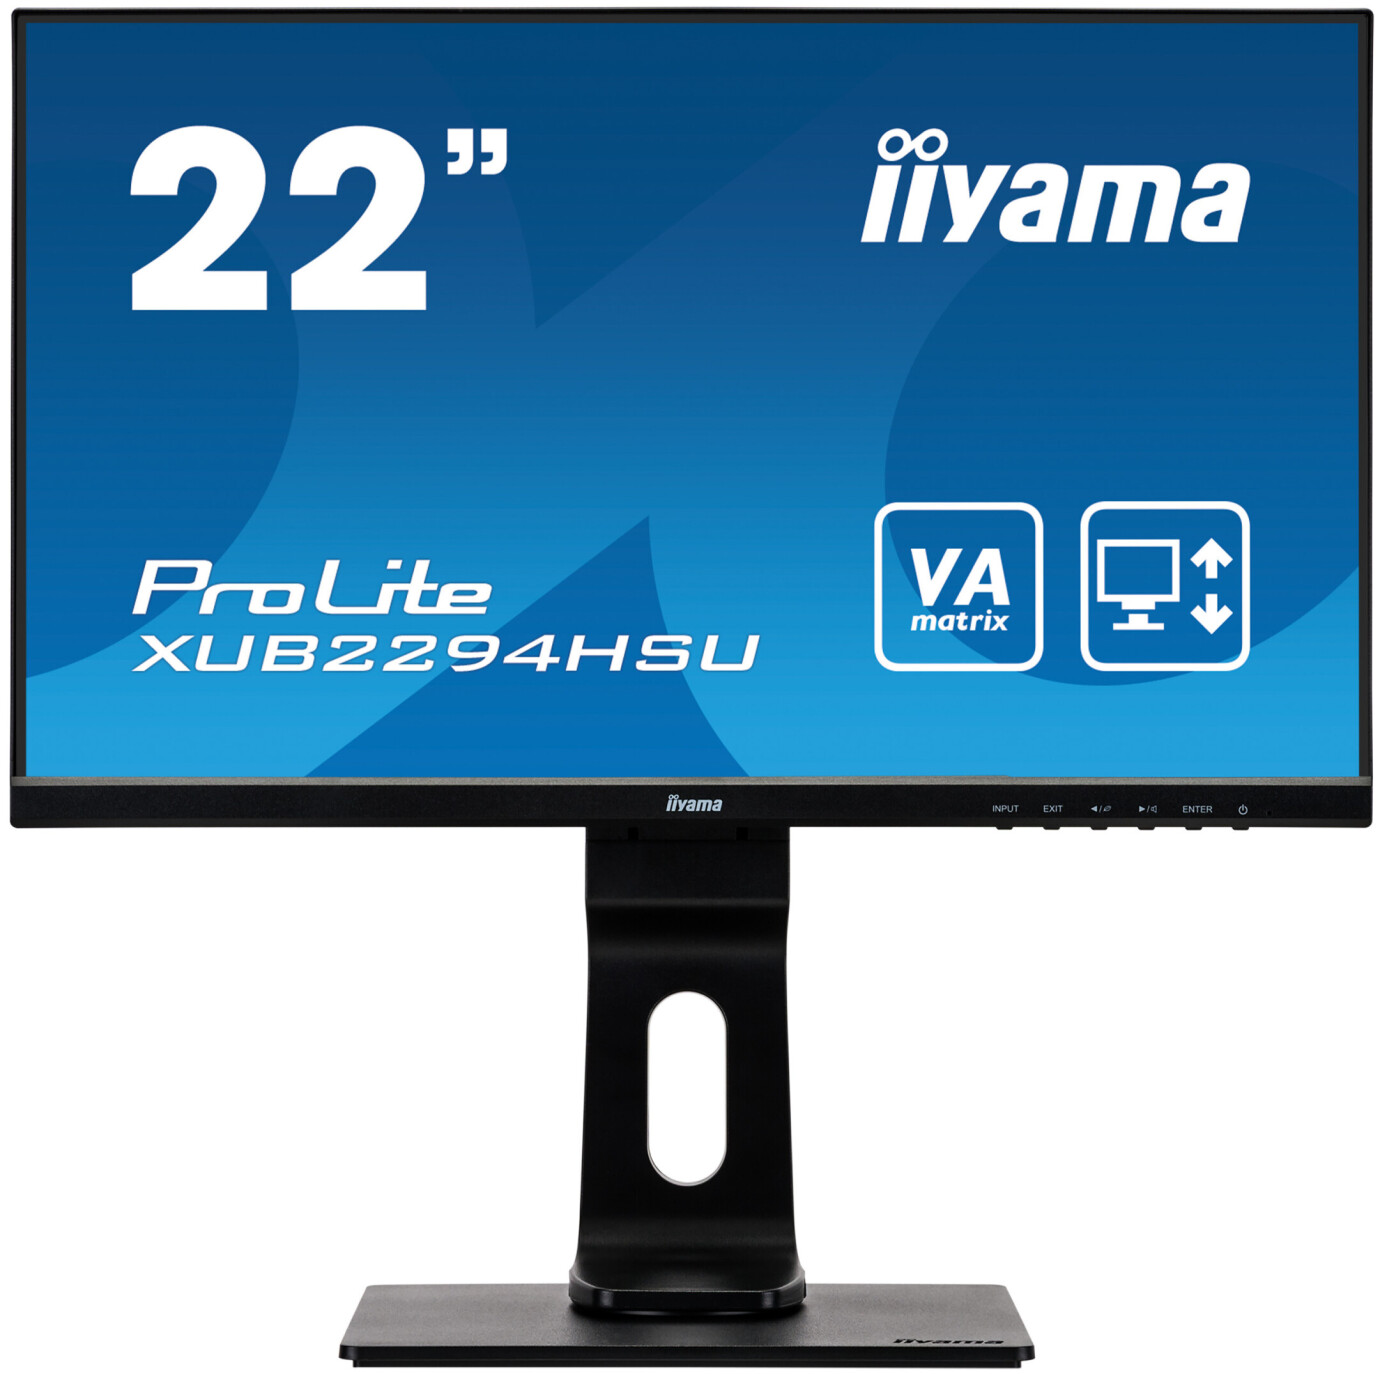 iiyama PROLITE XUB2294HSU-B1 22'' Businessmonitor mit 4ms und Full HD